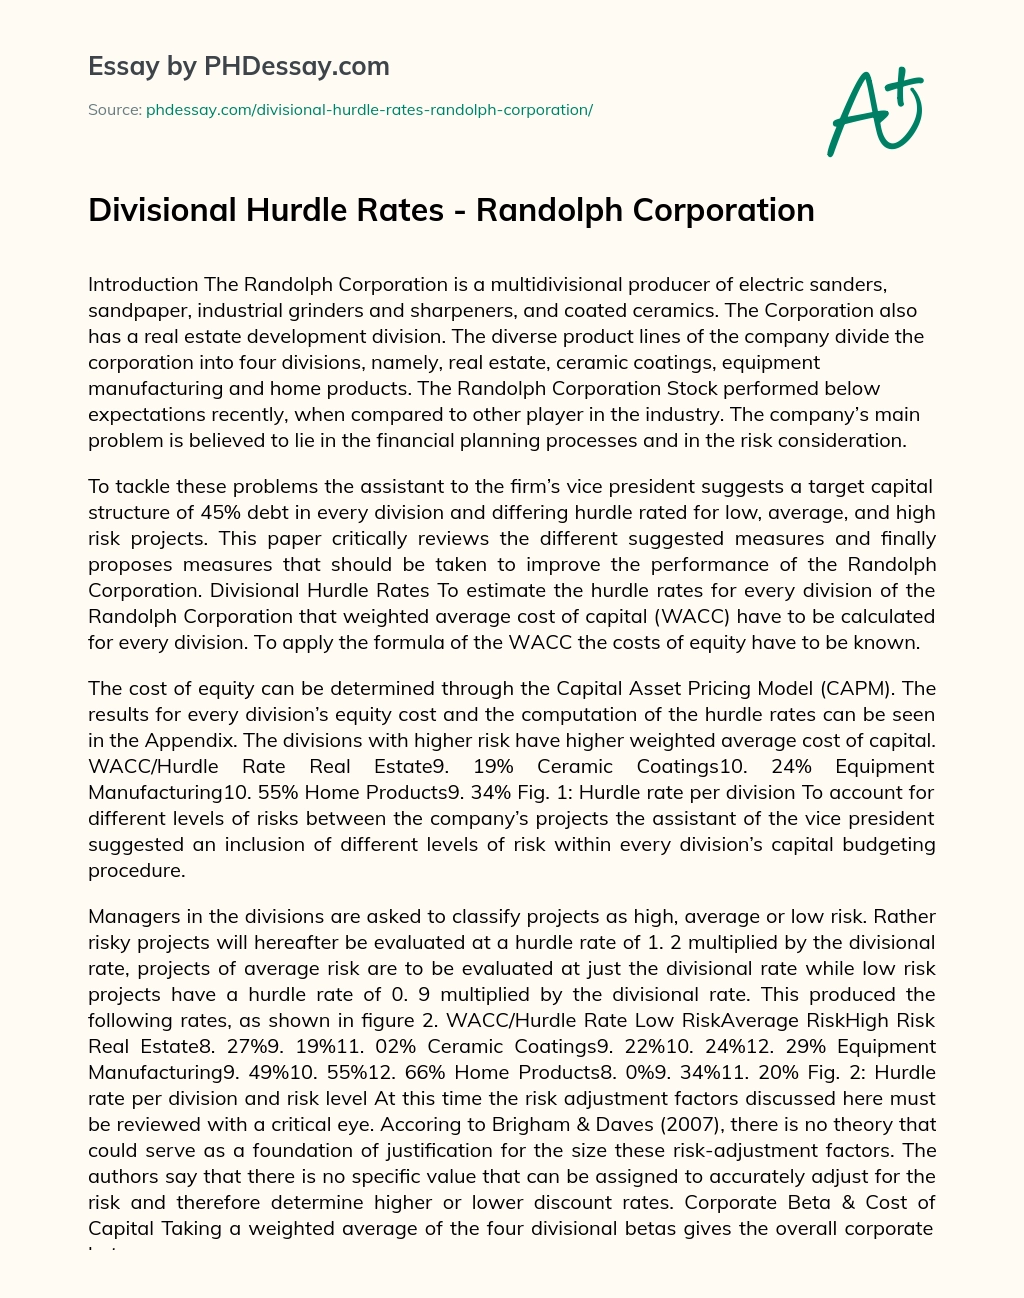 Divisional Hurdle Rates – Randolph Corporation essay